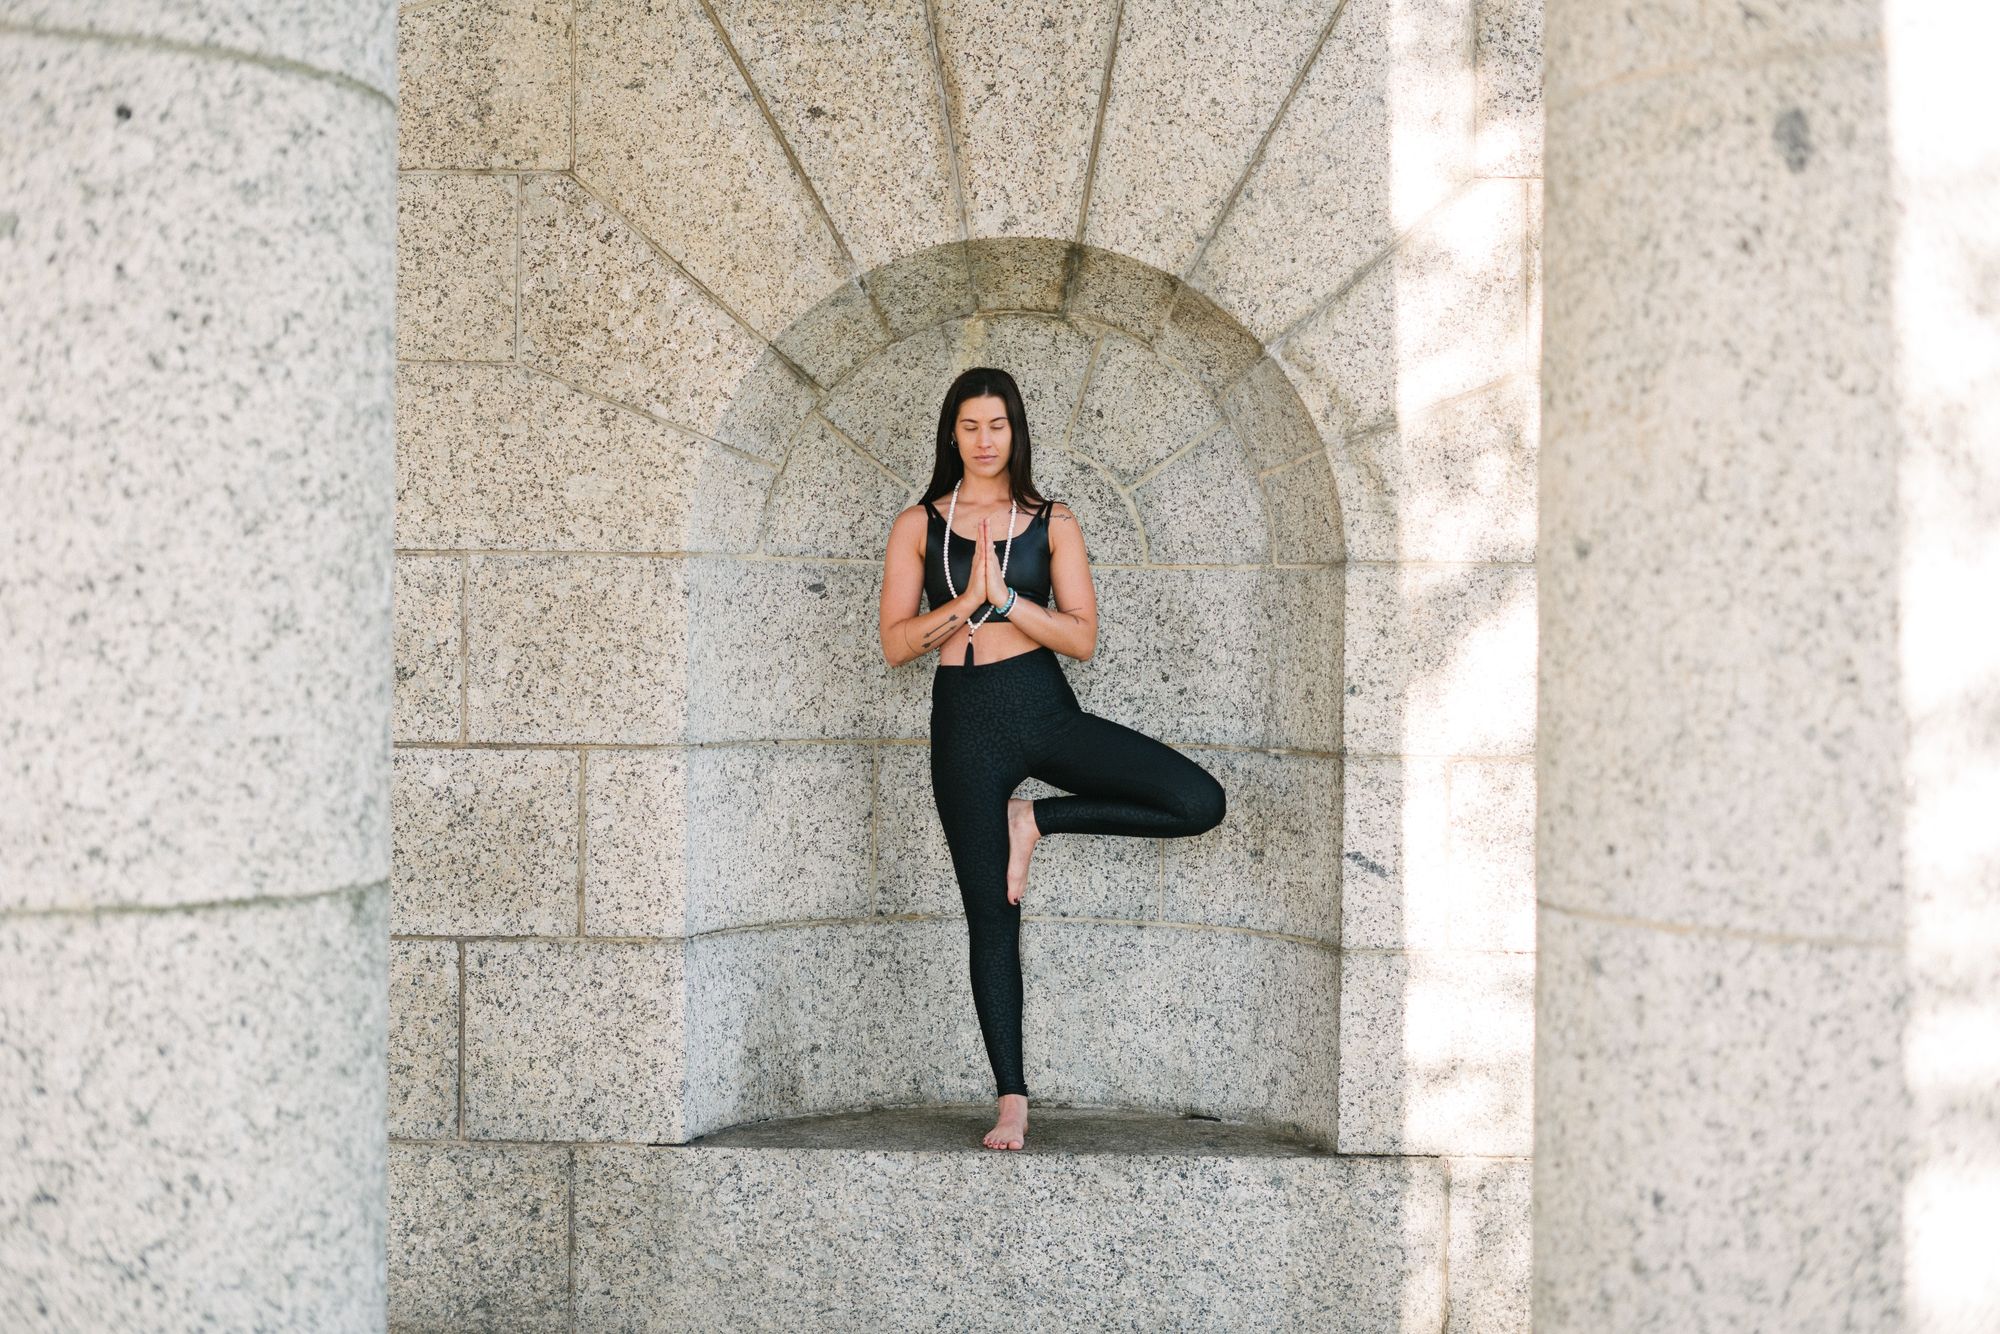 Woman balancing on one leg in yoga position